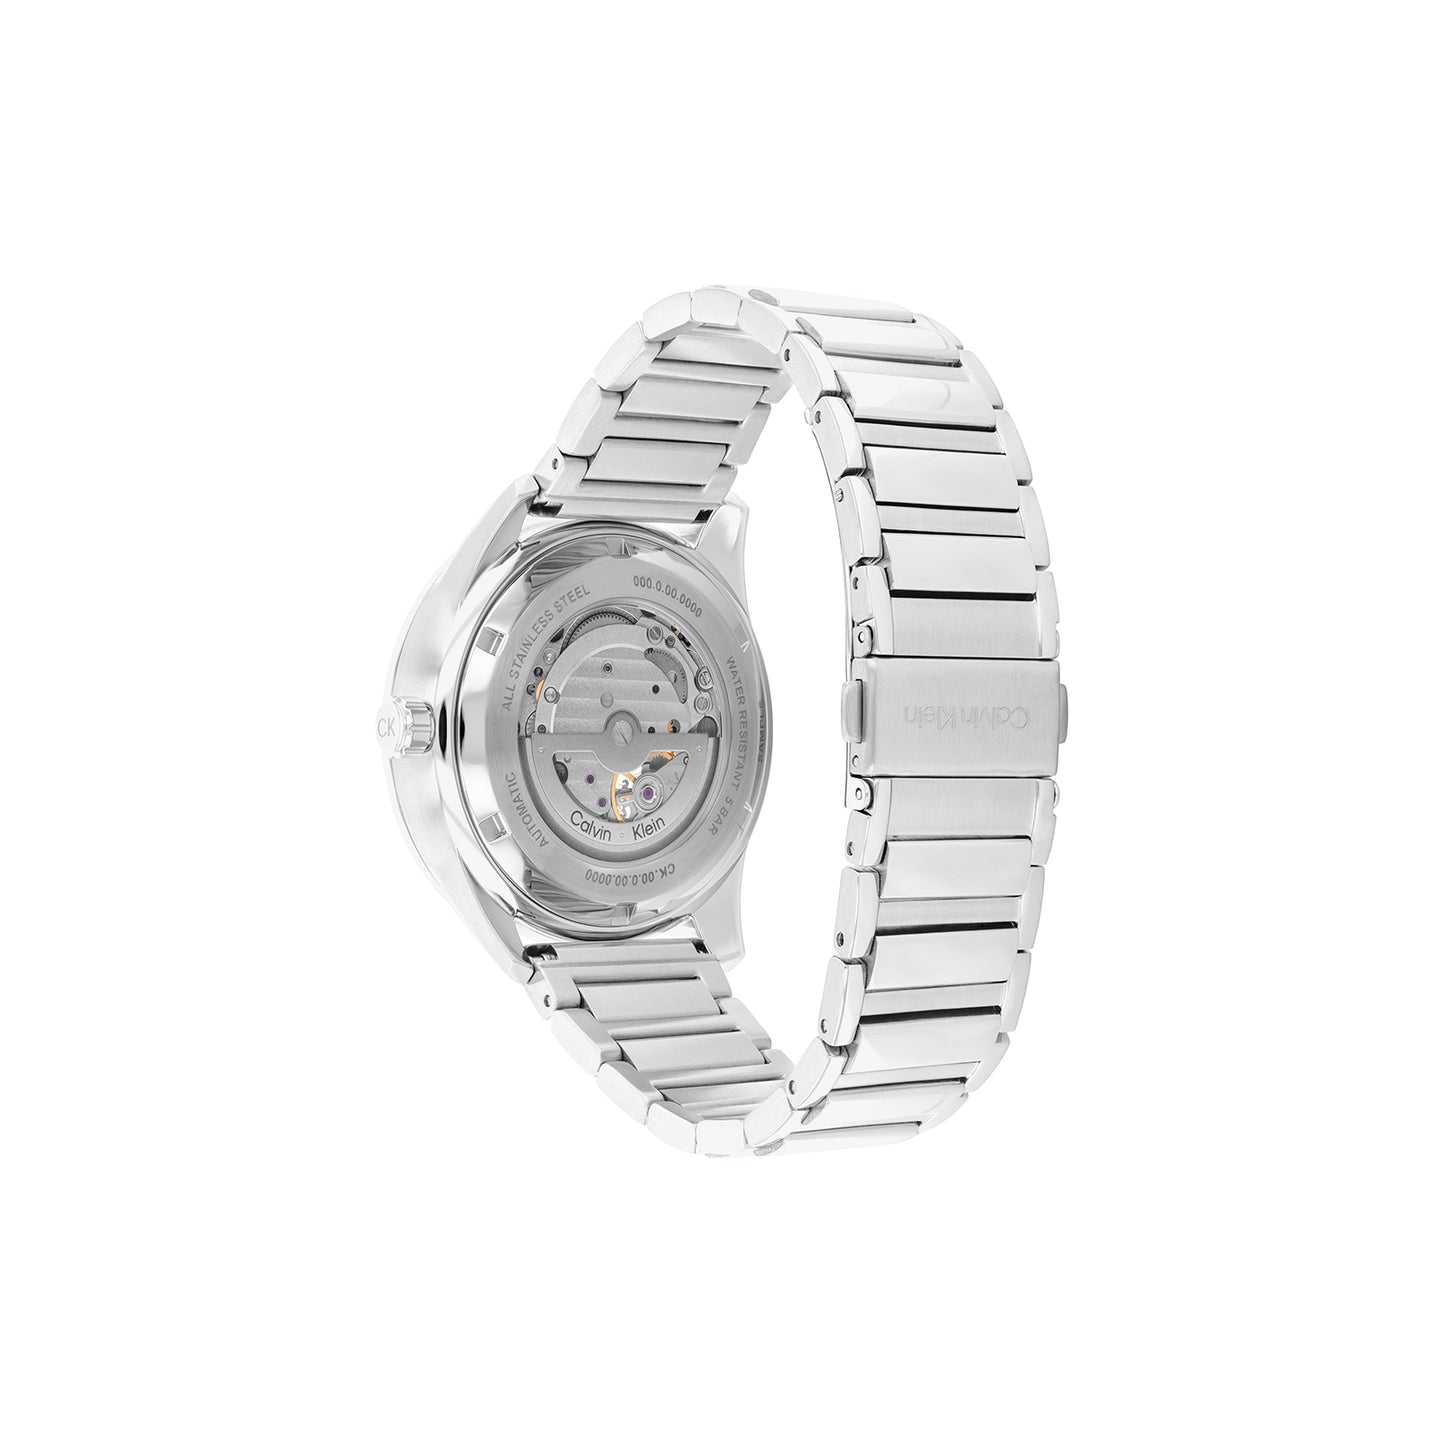 Calvin Klein 25200387 Men's Steel Automatic Watch